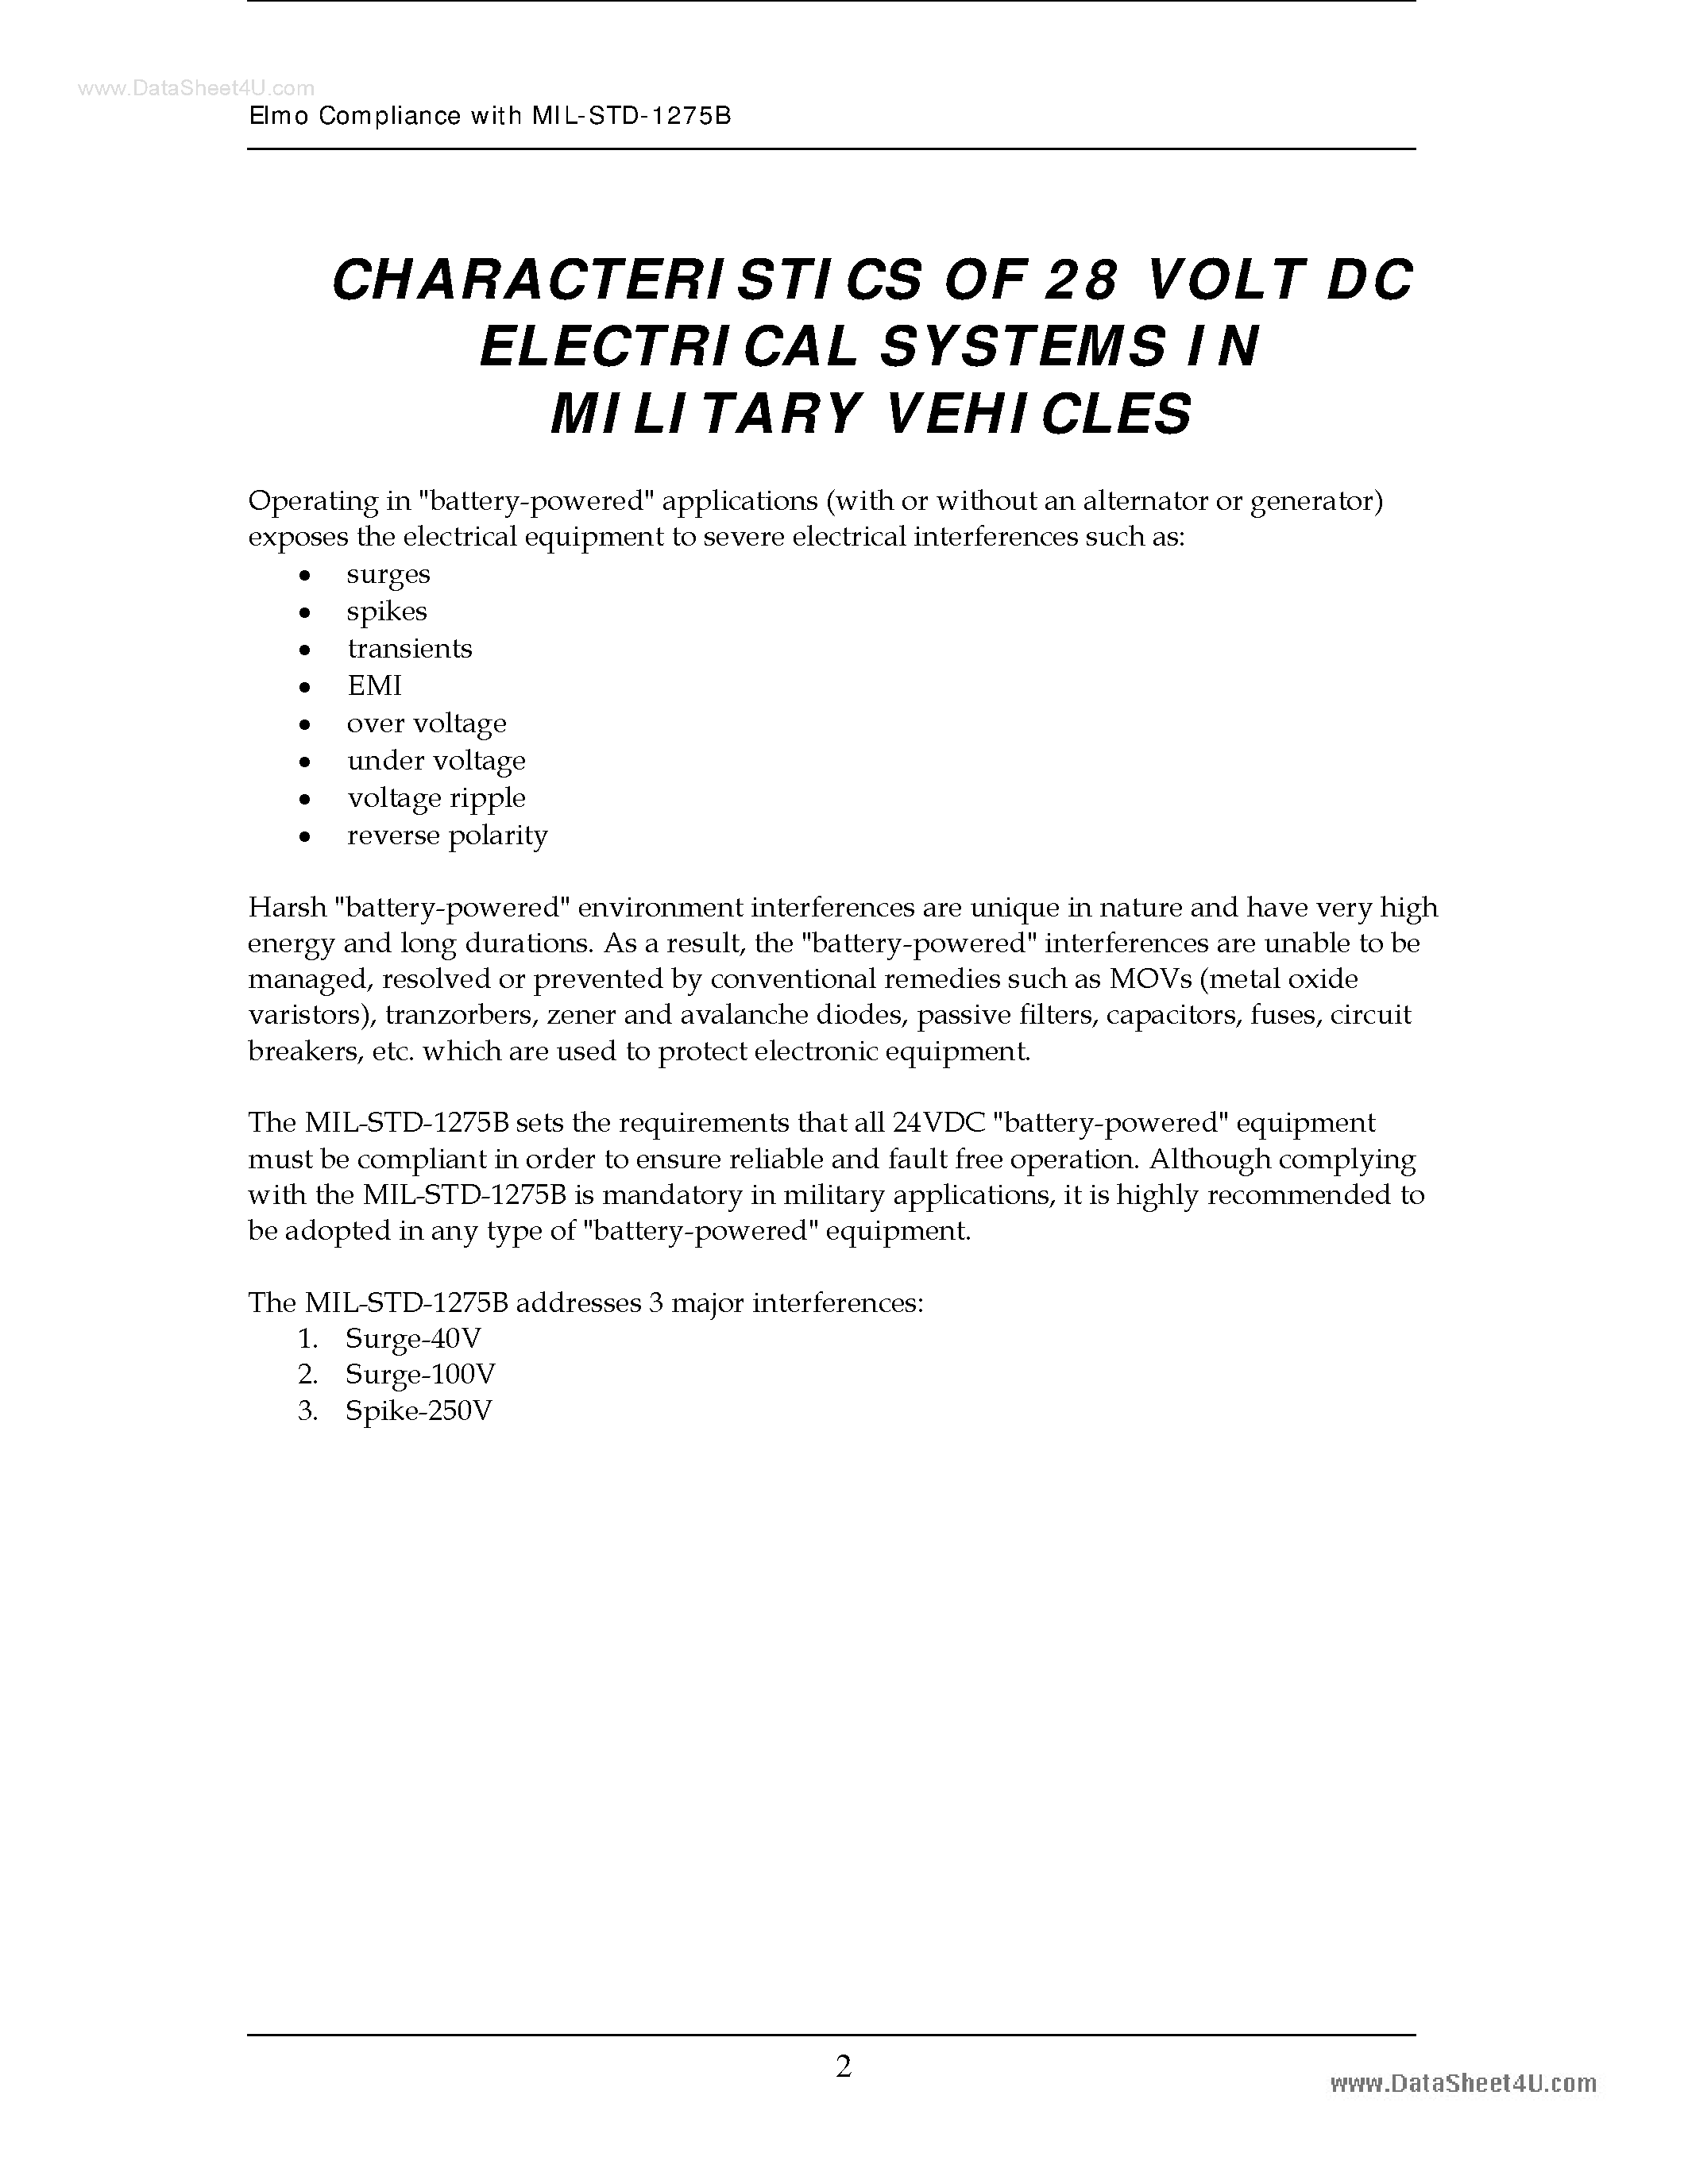 Datasheet MIL-STD-1275B - Elmo Compliance page 2